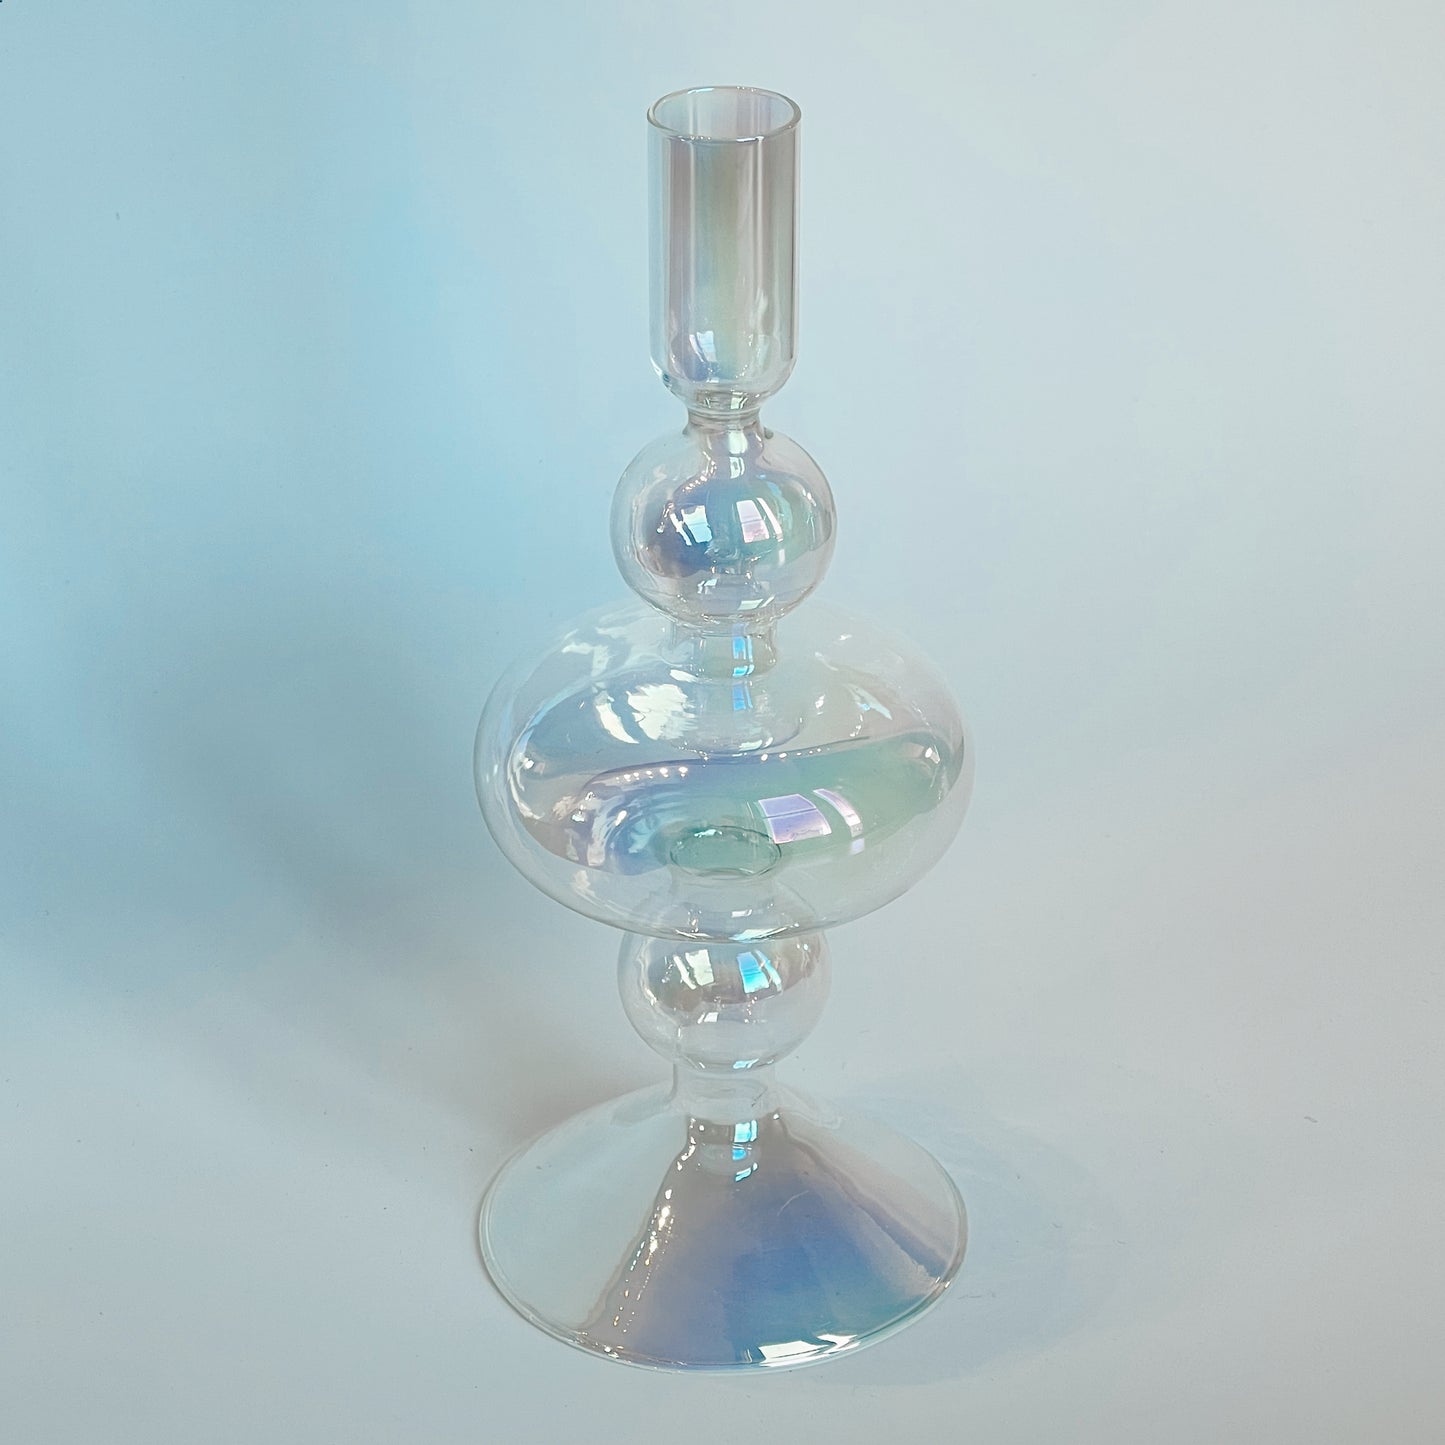 Tyra Candlestick holder / Vase